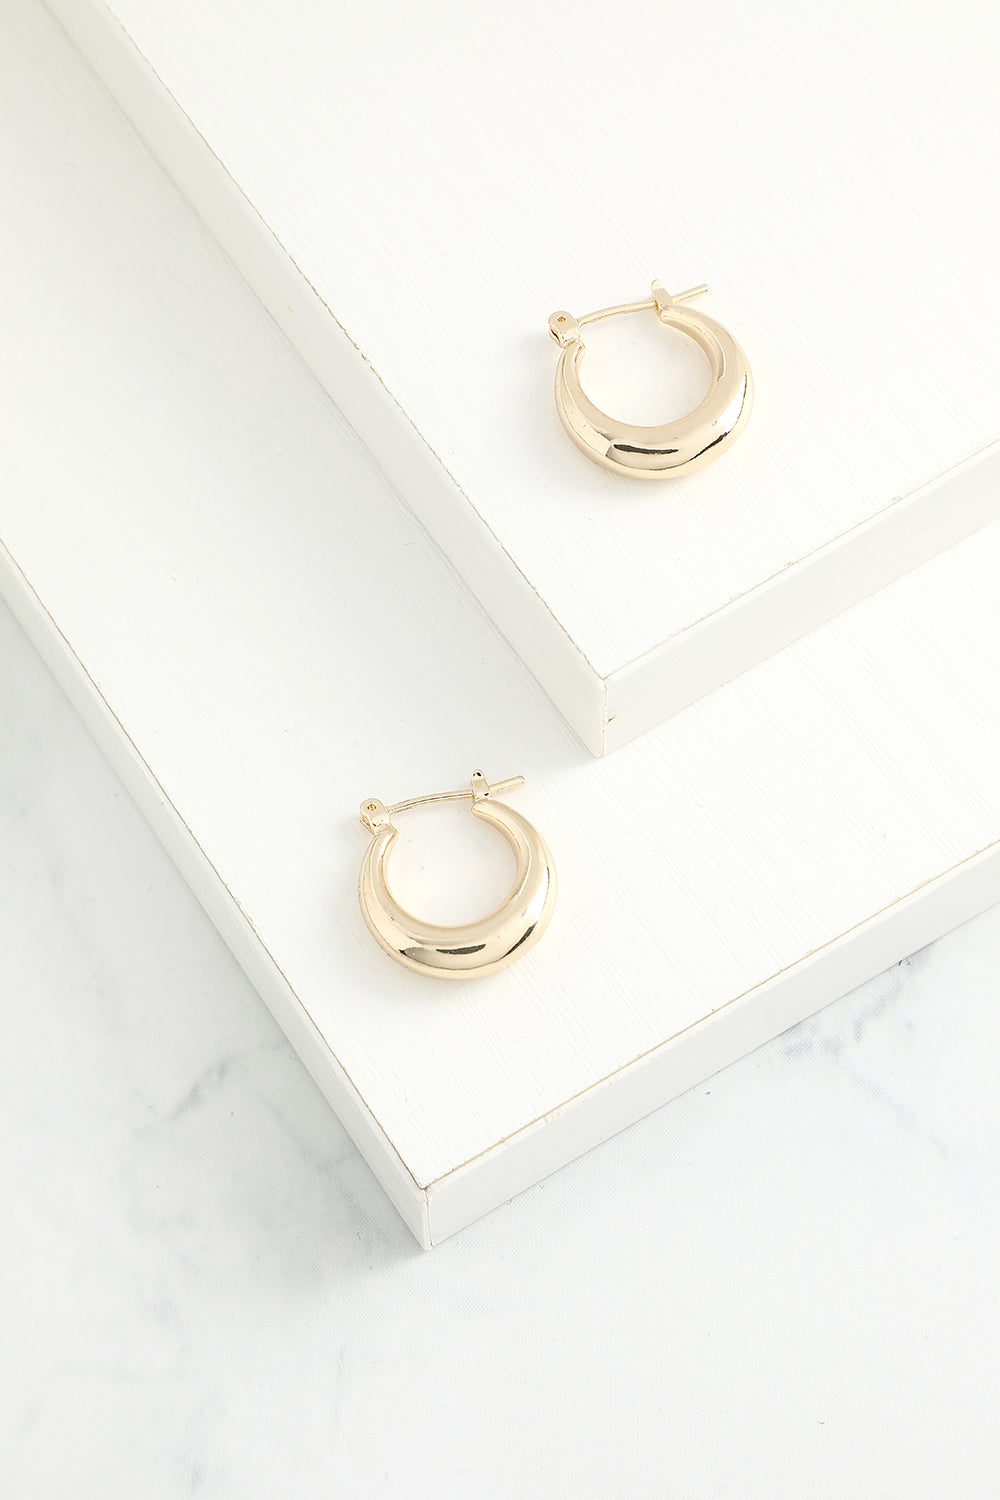 Simple Gold Circle Earrings